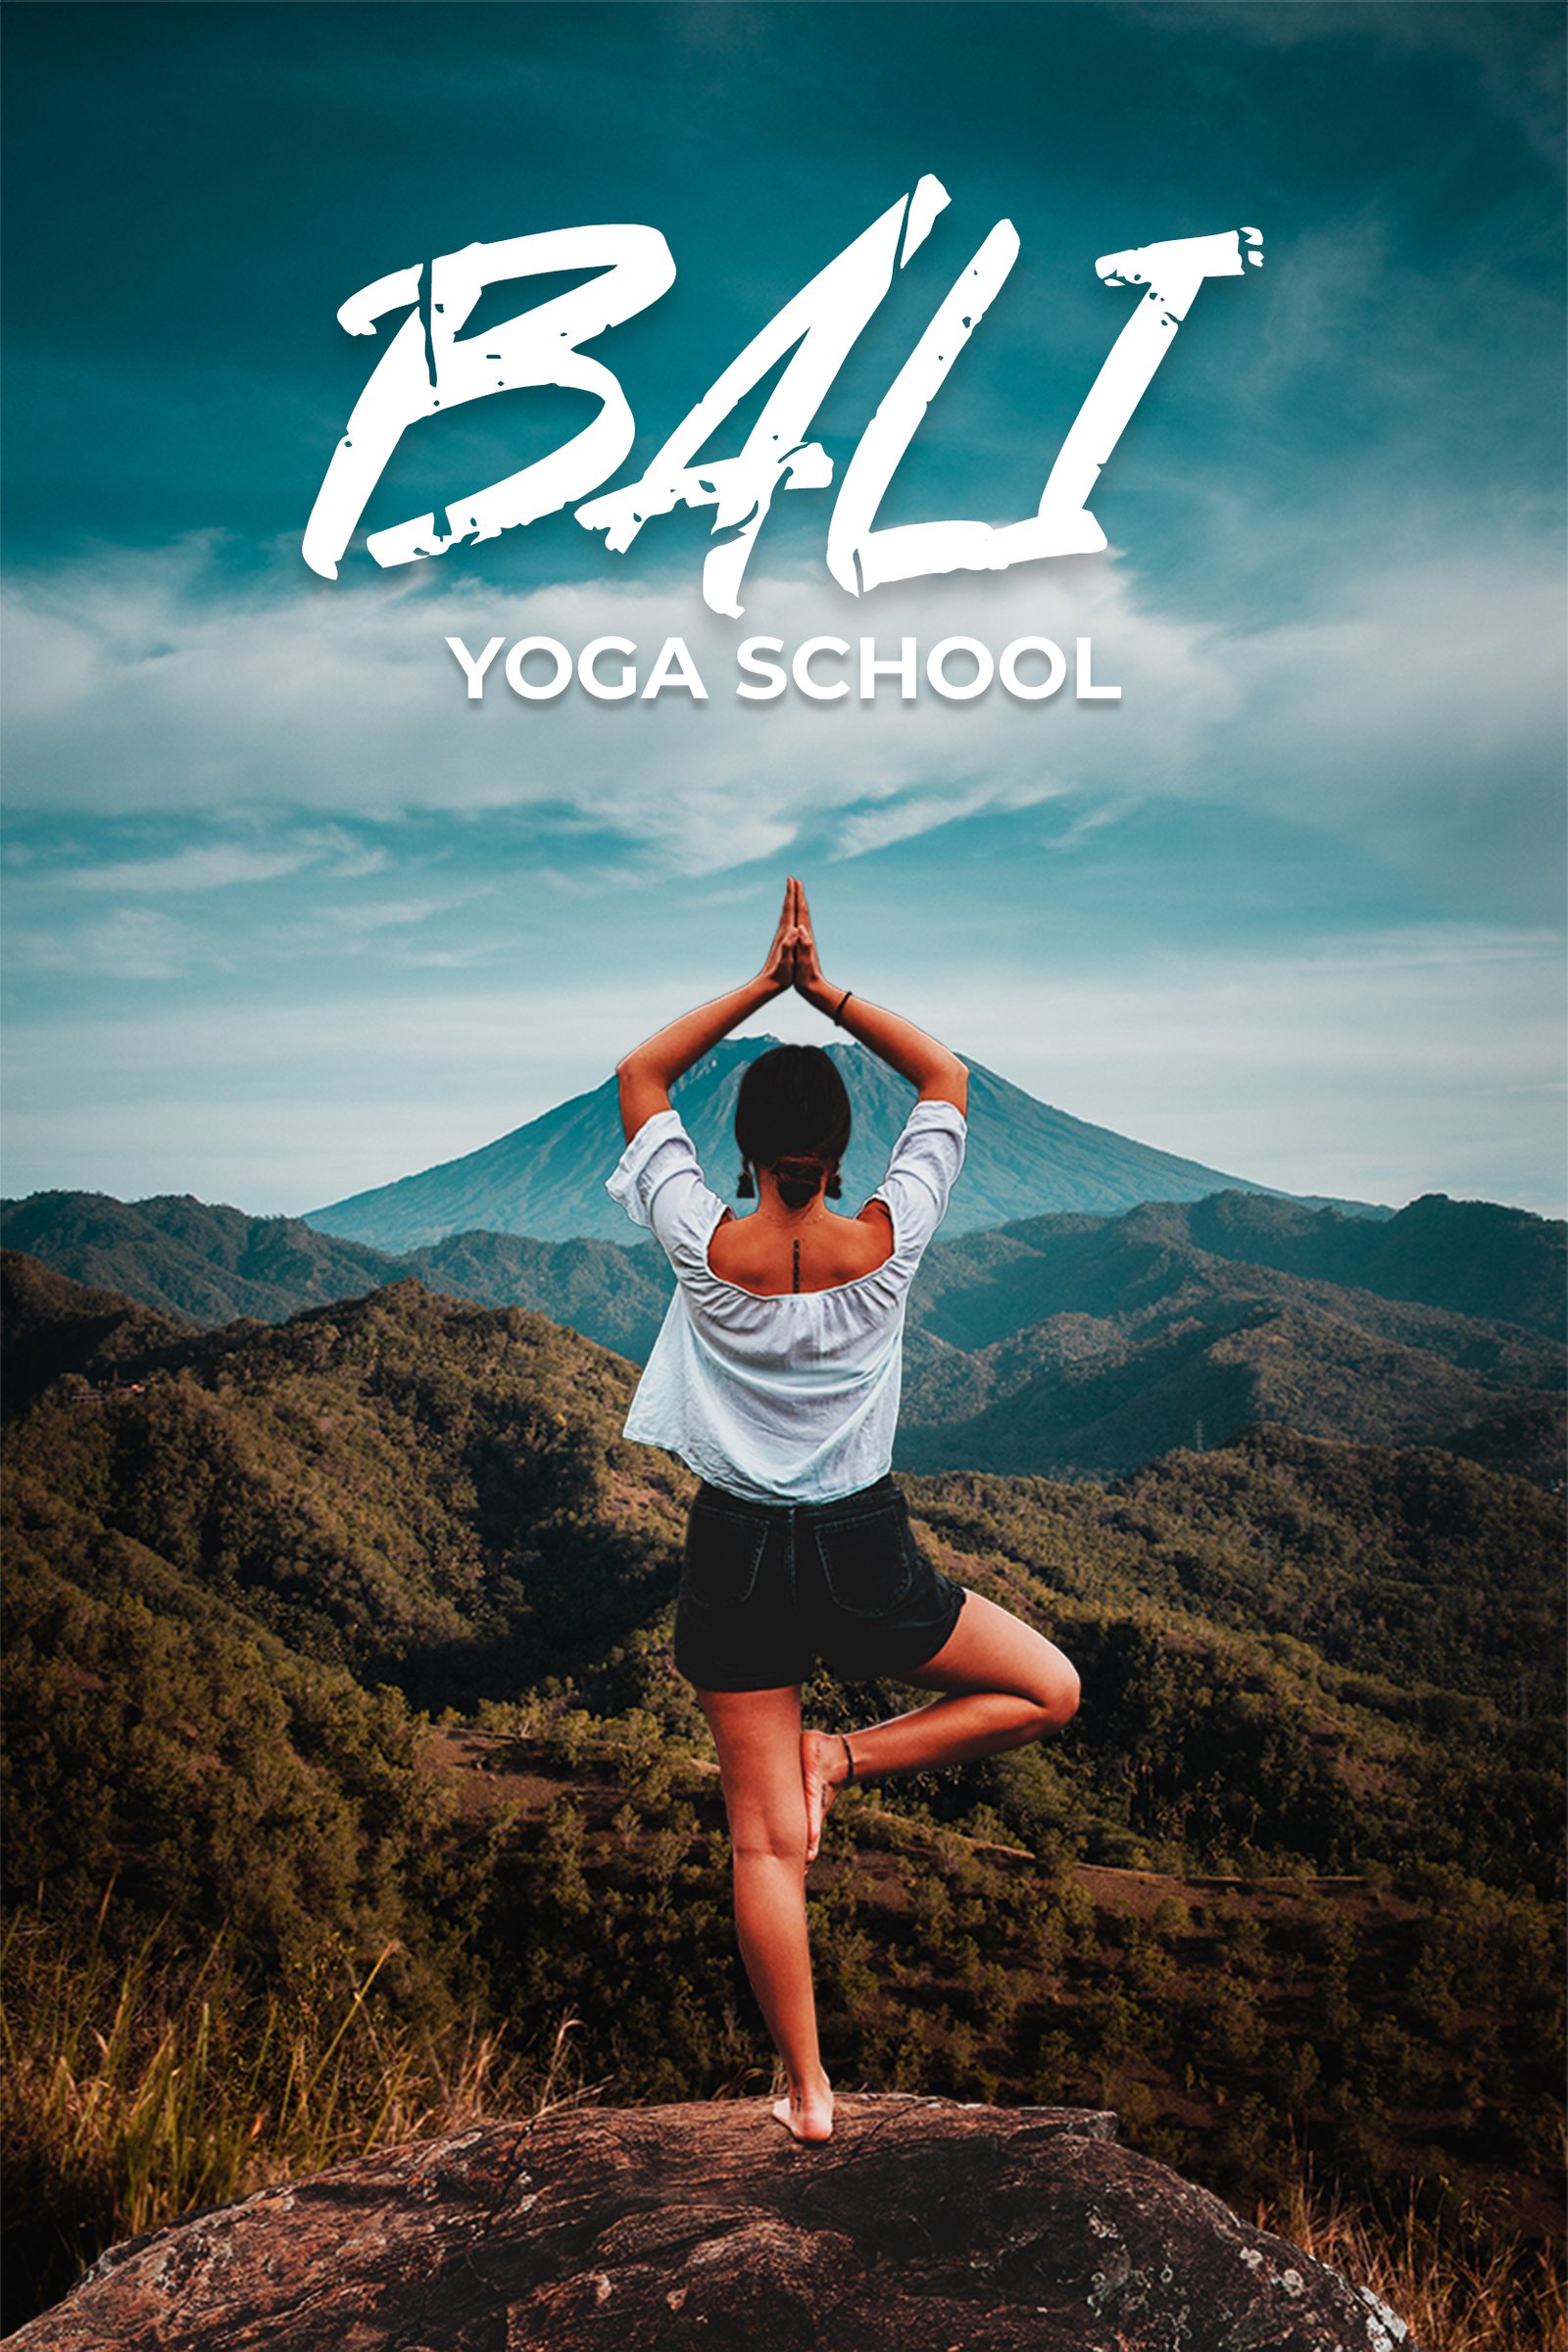 Bali Yoga School